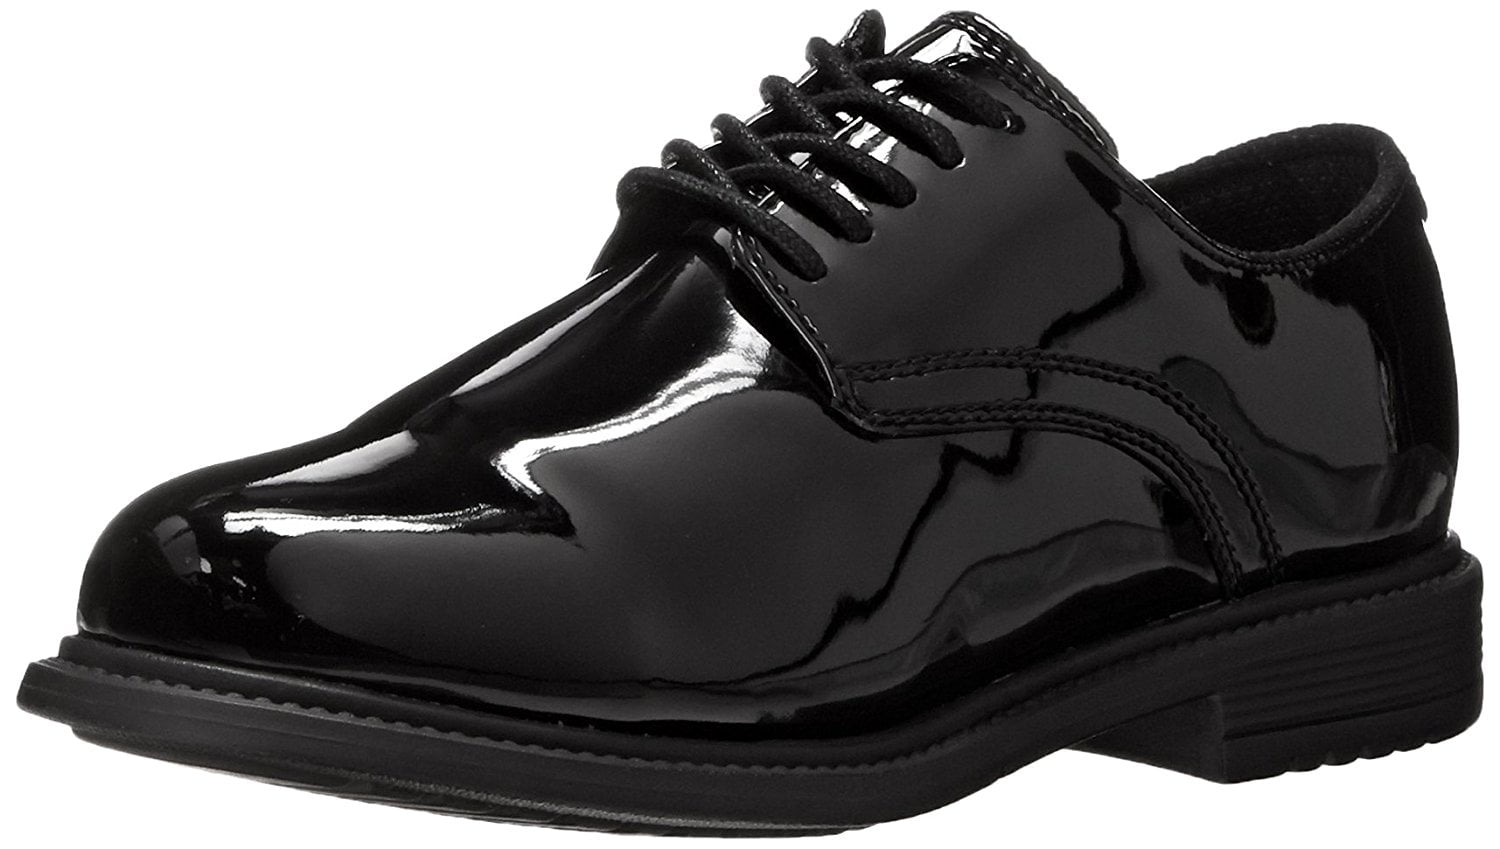 Original SWAT 1180 Dress Oxford Shoes, Black, Size 9.5 Regular ...